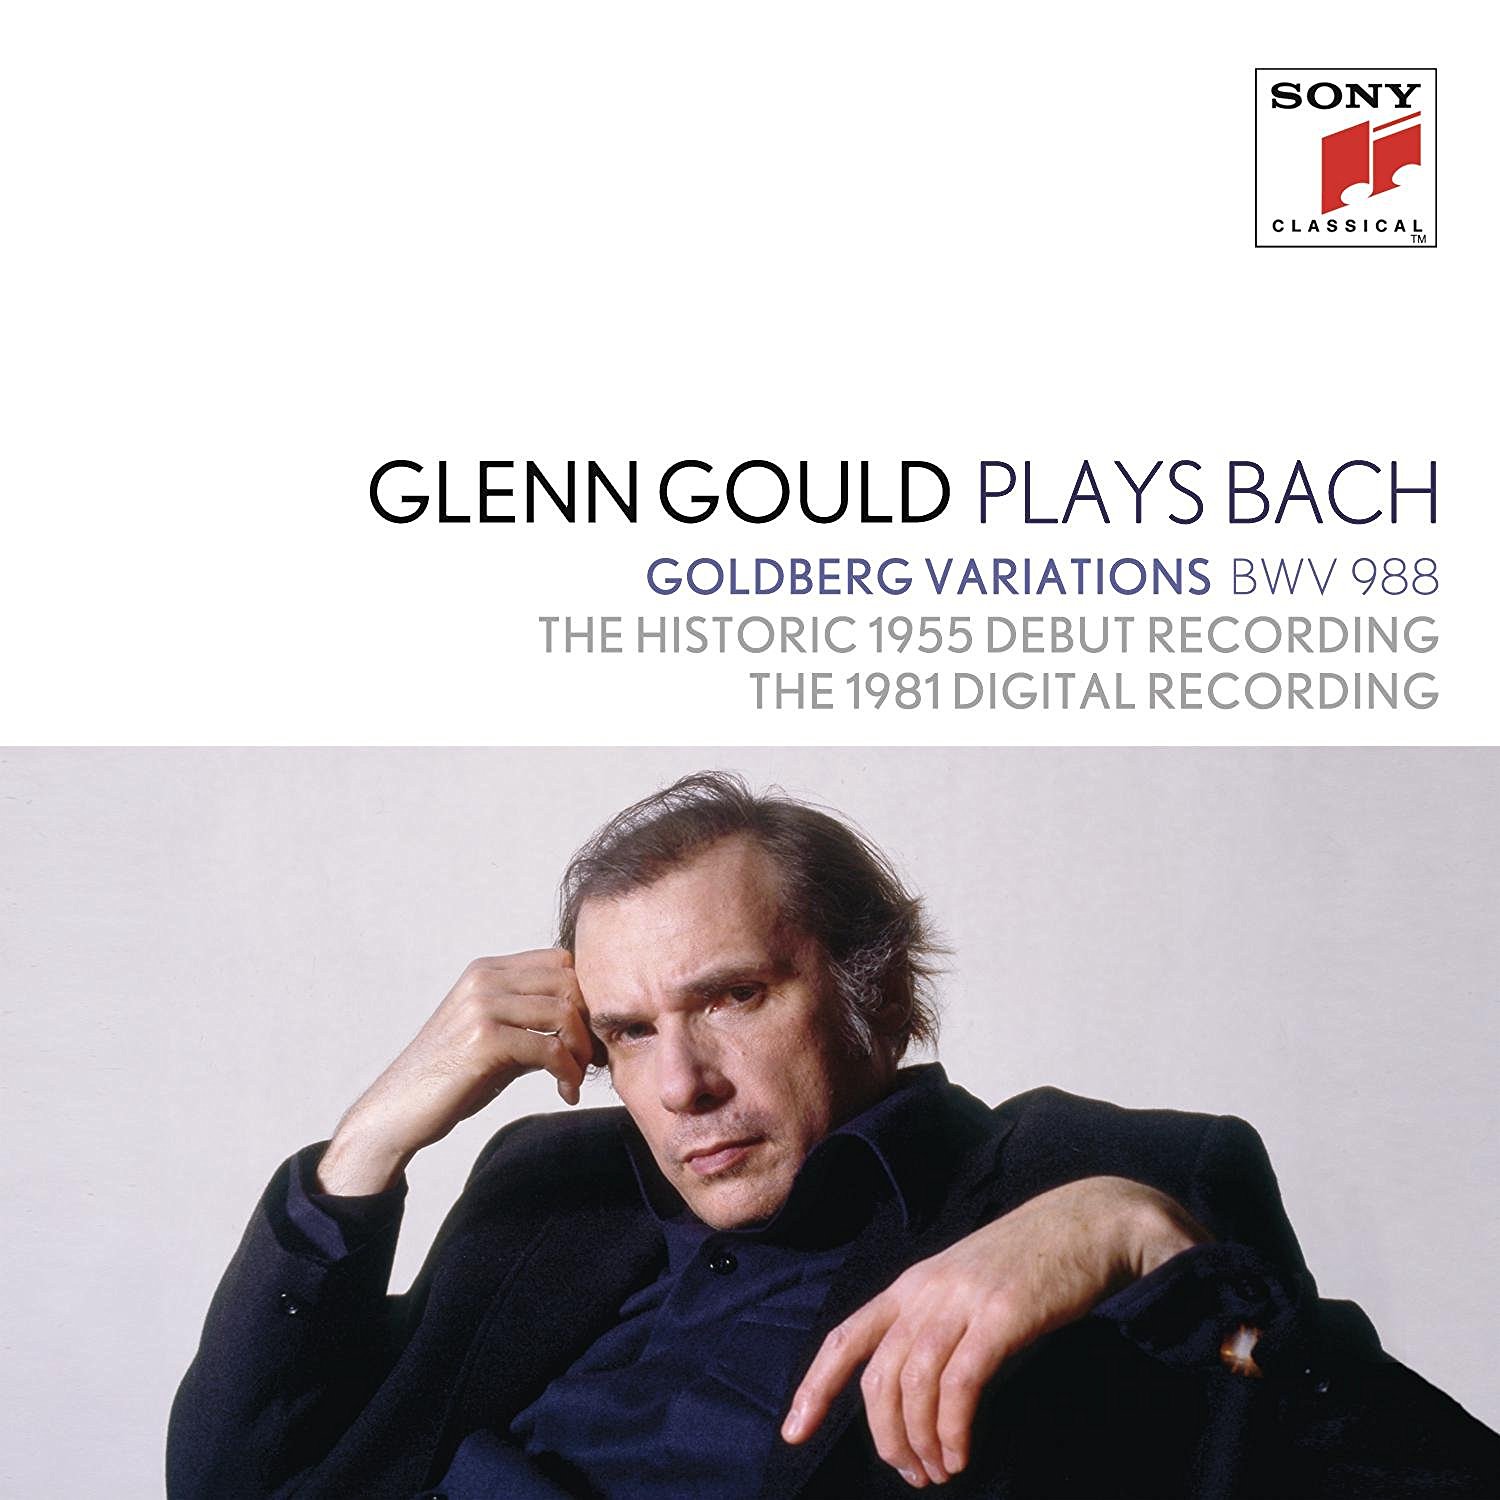 Bach - GLENN GOULD PLAYS BACH GOLDBERG VARIATIONS CD